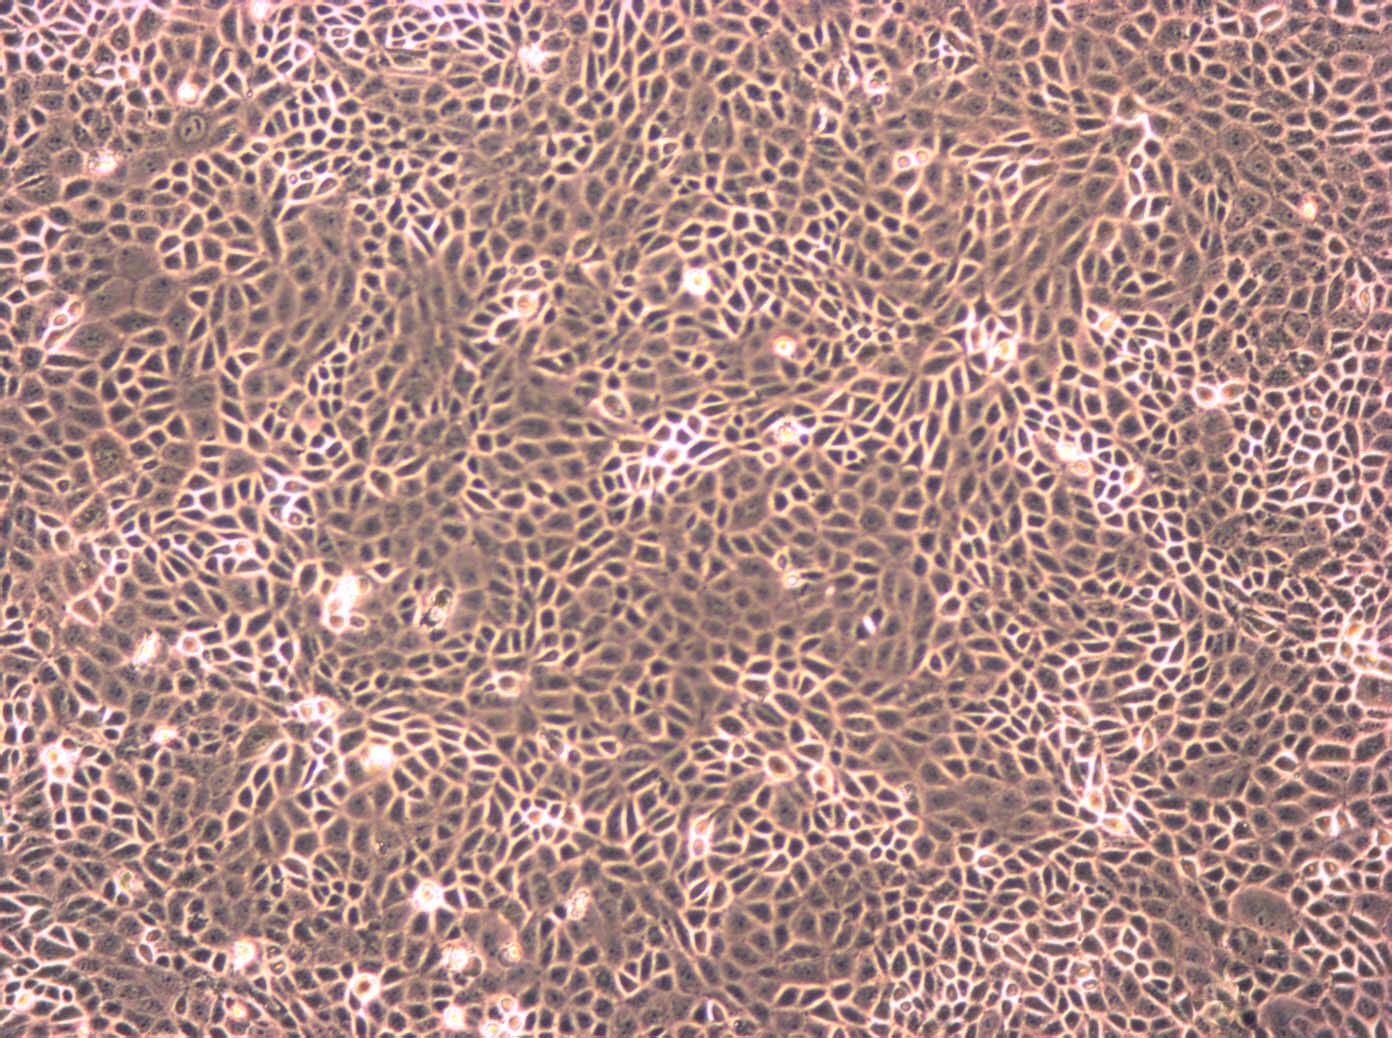 IAR 20 Cell|大鼠肝细胞